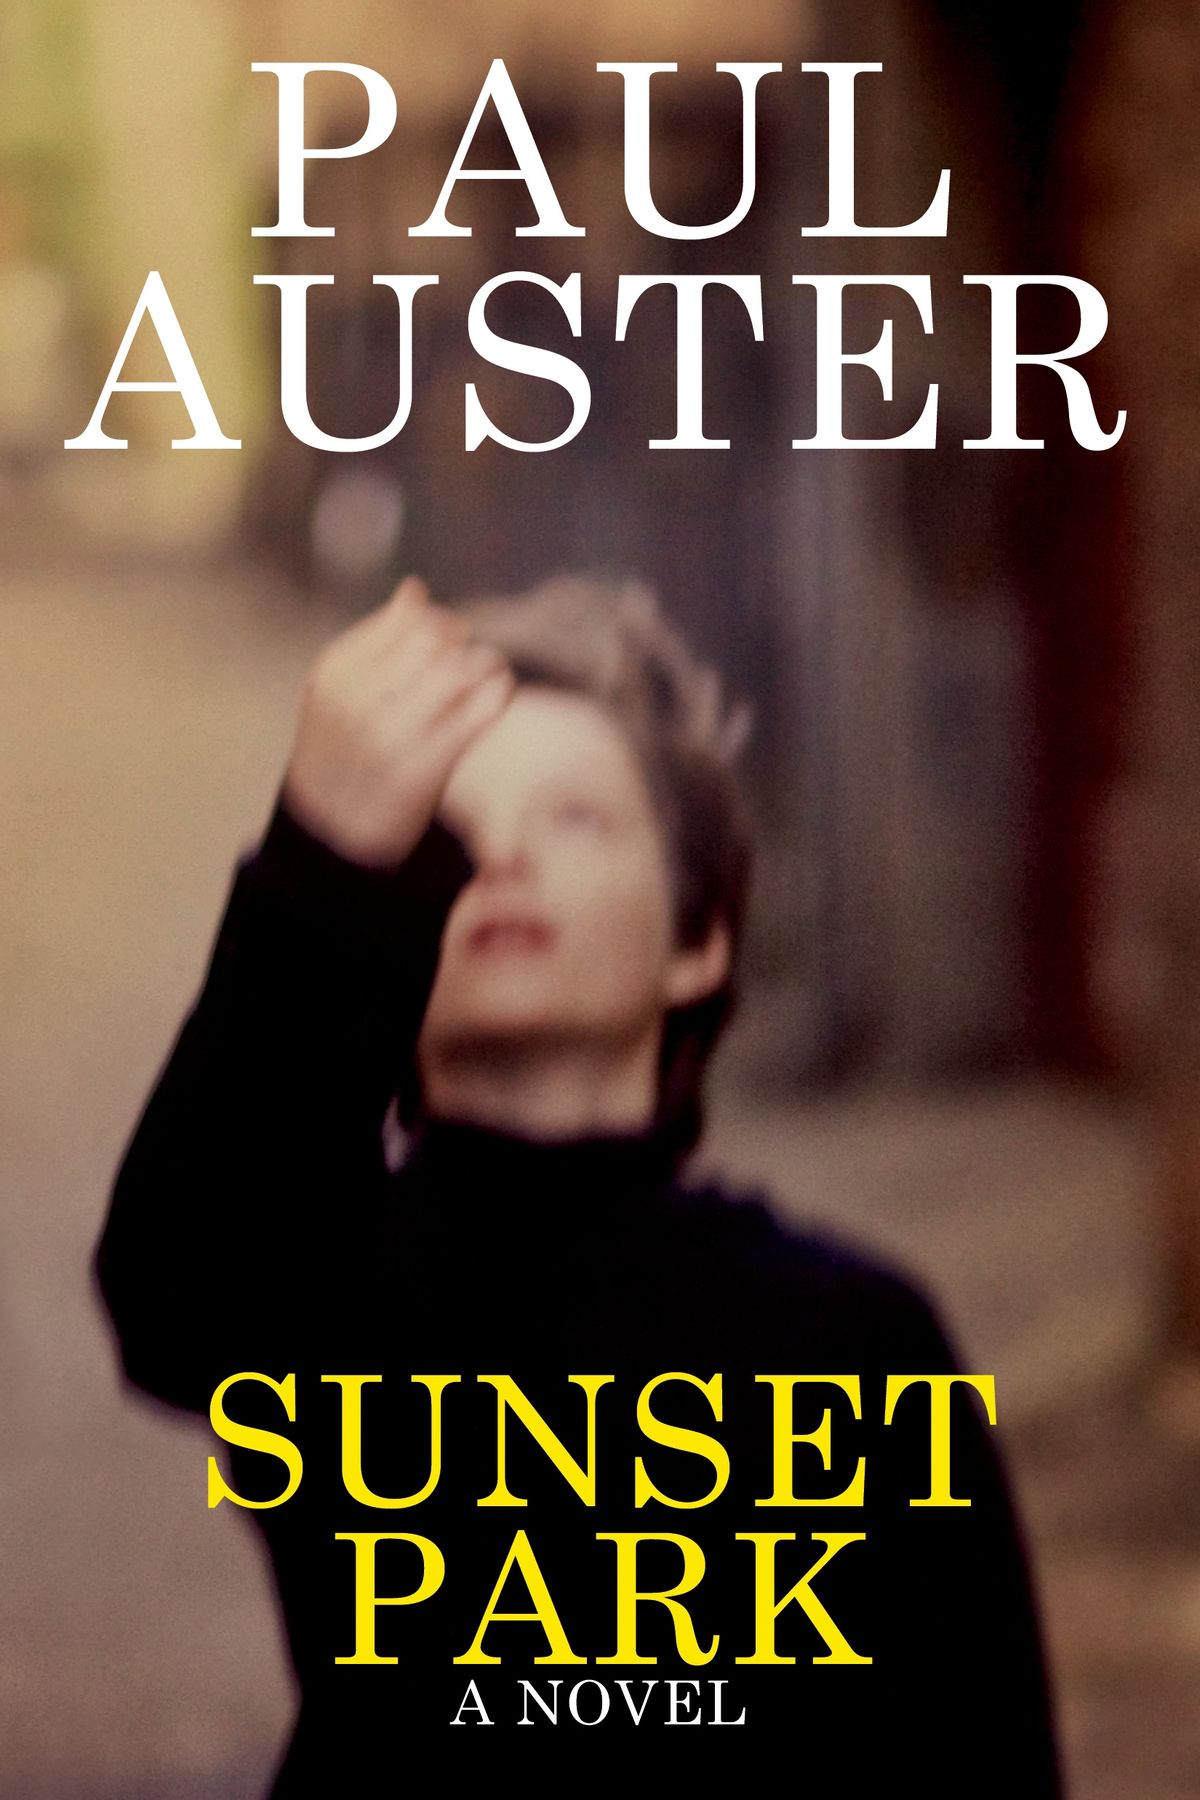 "Sunset Park" by Paul Auster 